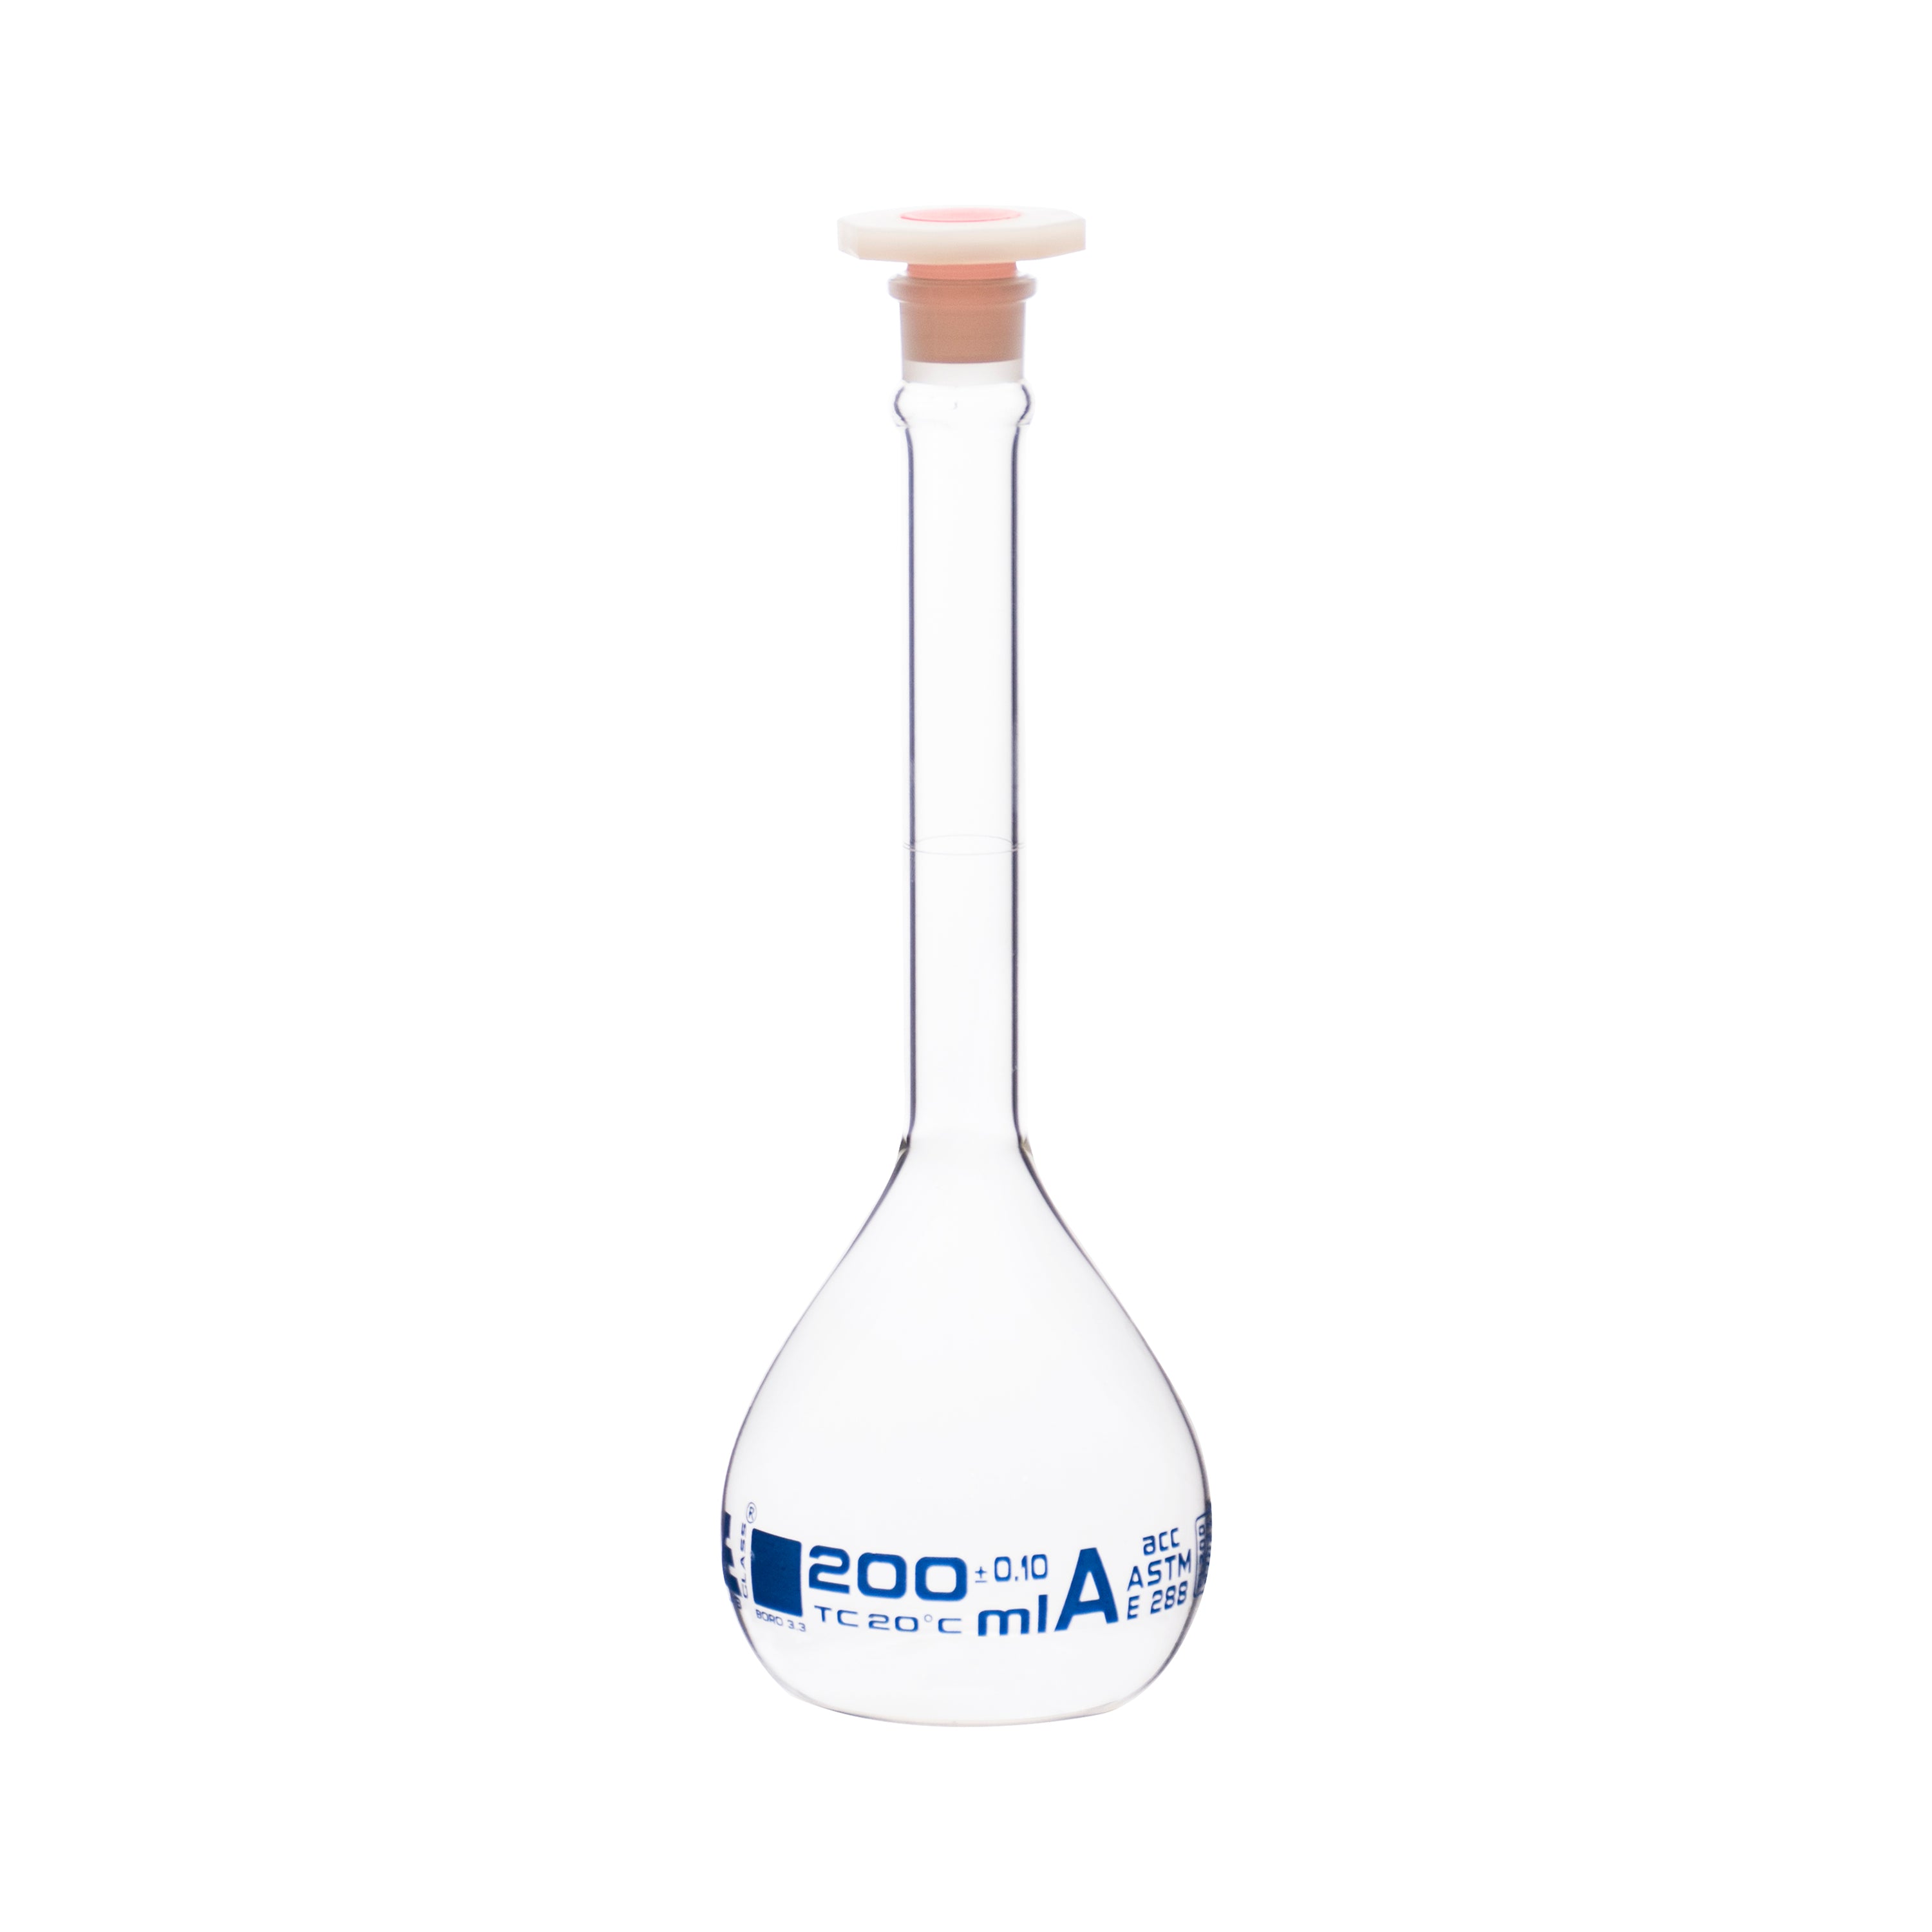 Borosilicate Volumetric Flask with Polyethylene Stopper, 200 ml, Class A, Blue Print, ASTM, Autoclavable